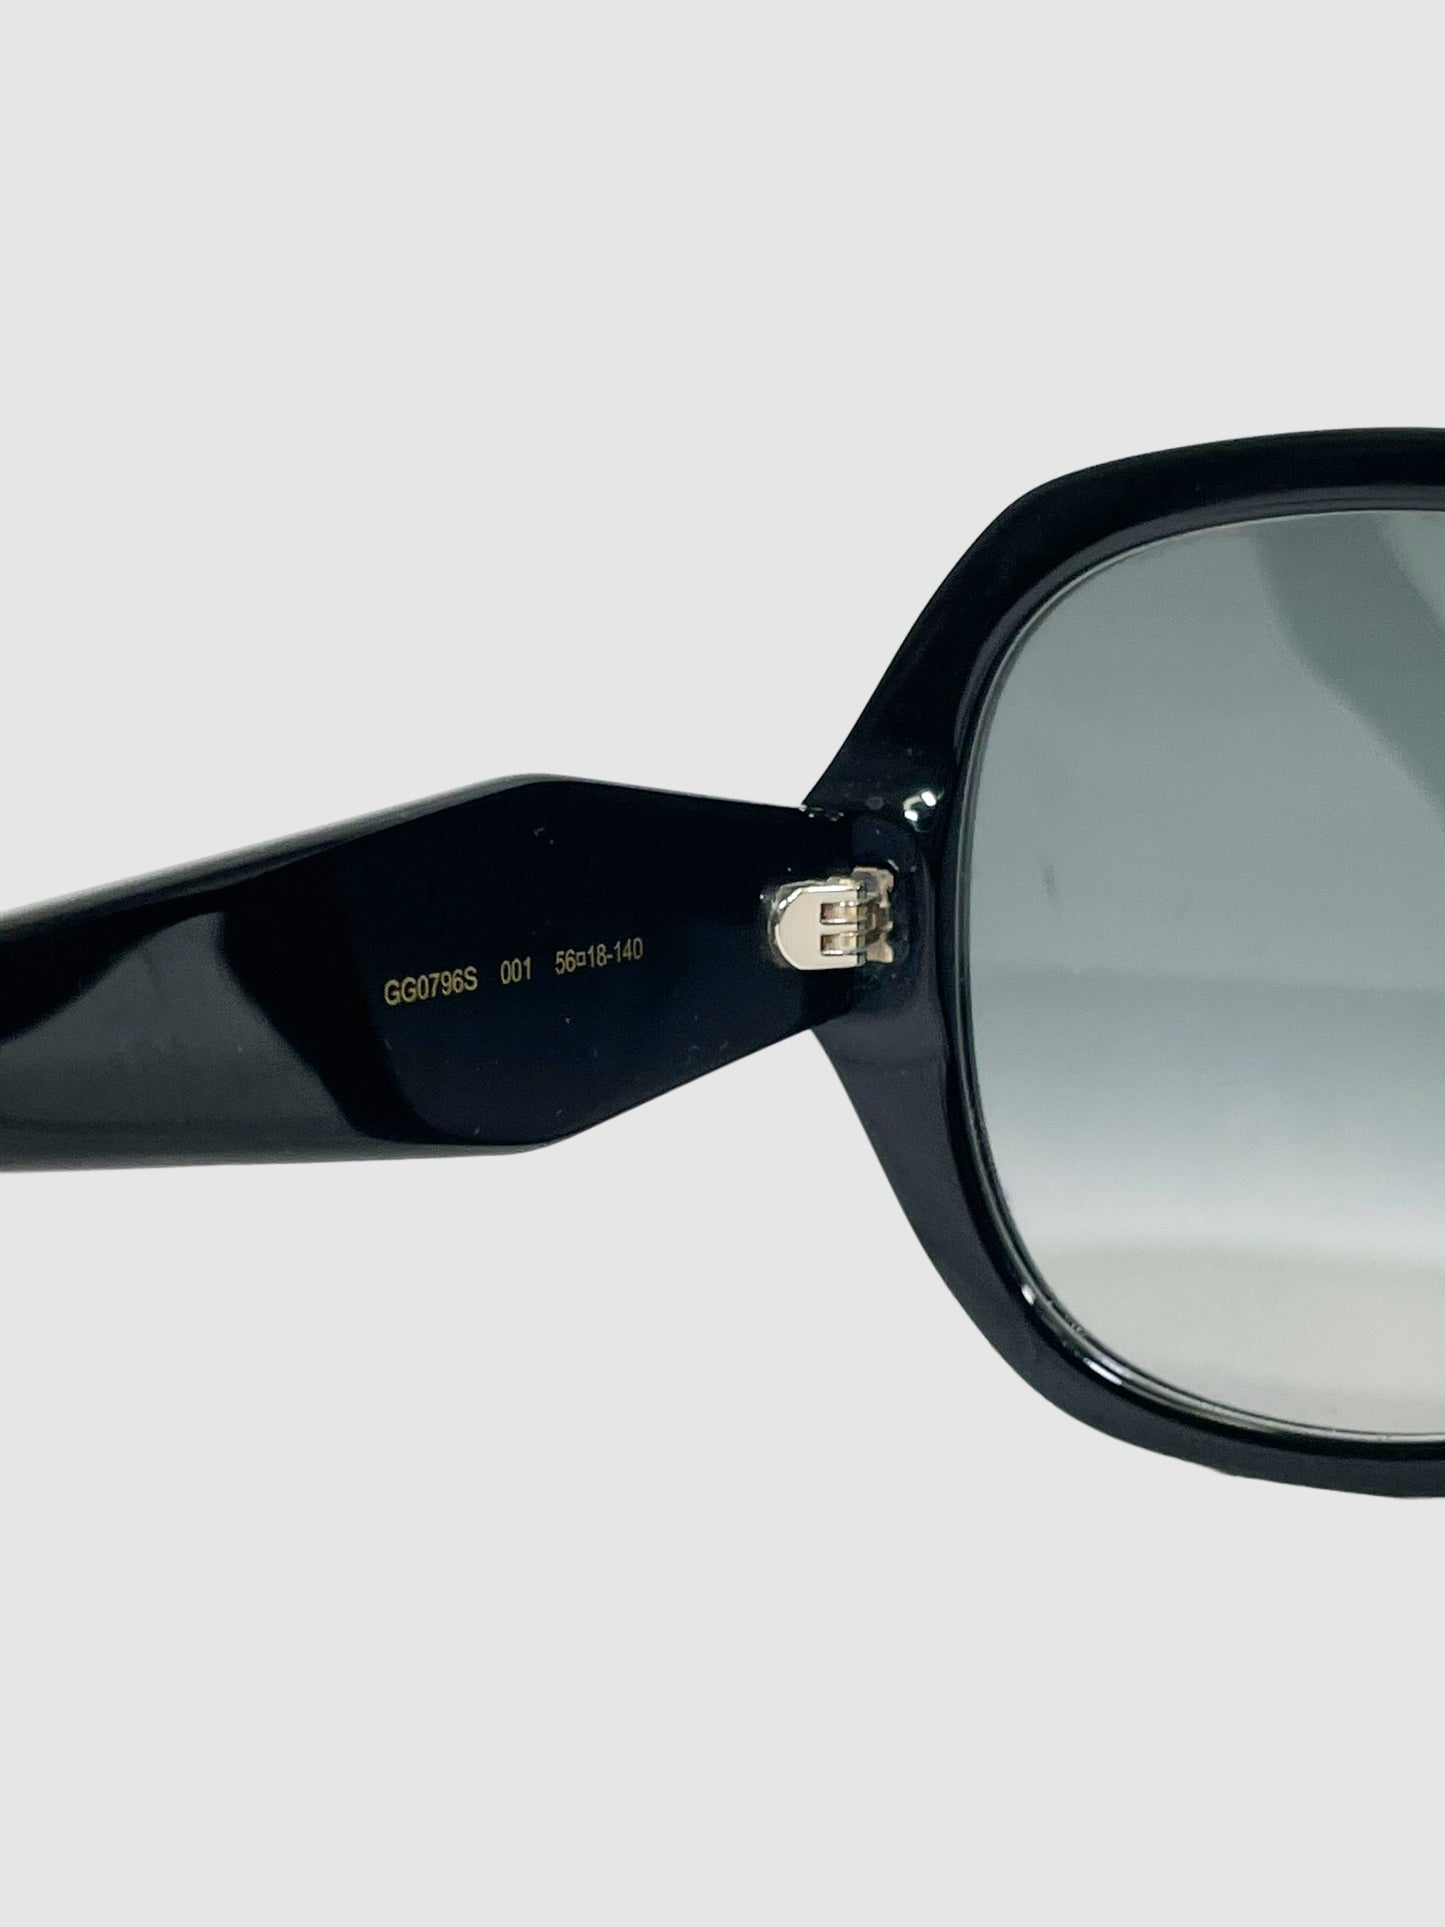 Gucci Interlocking G Logo Oversize Sunglasses